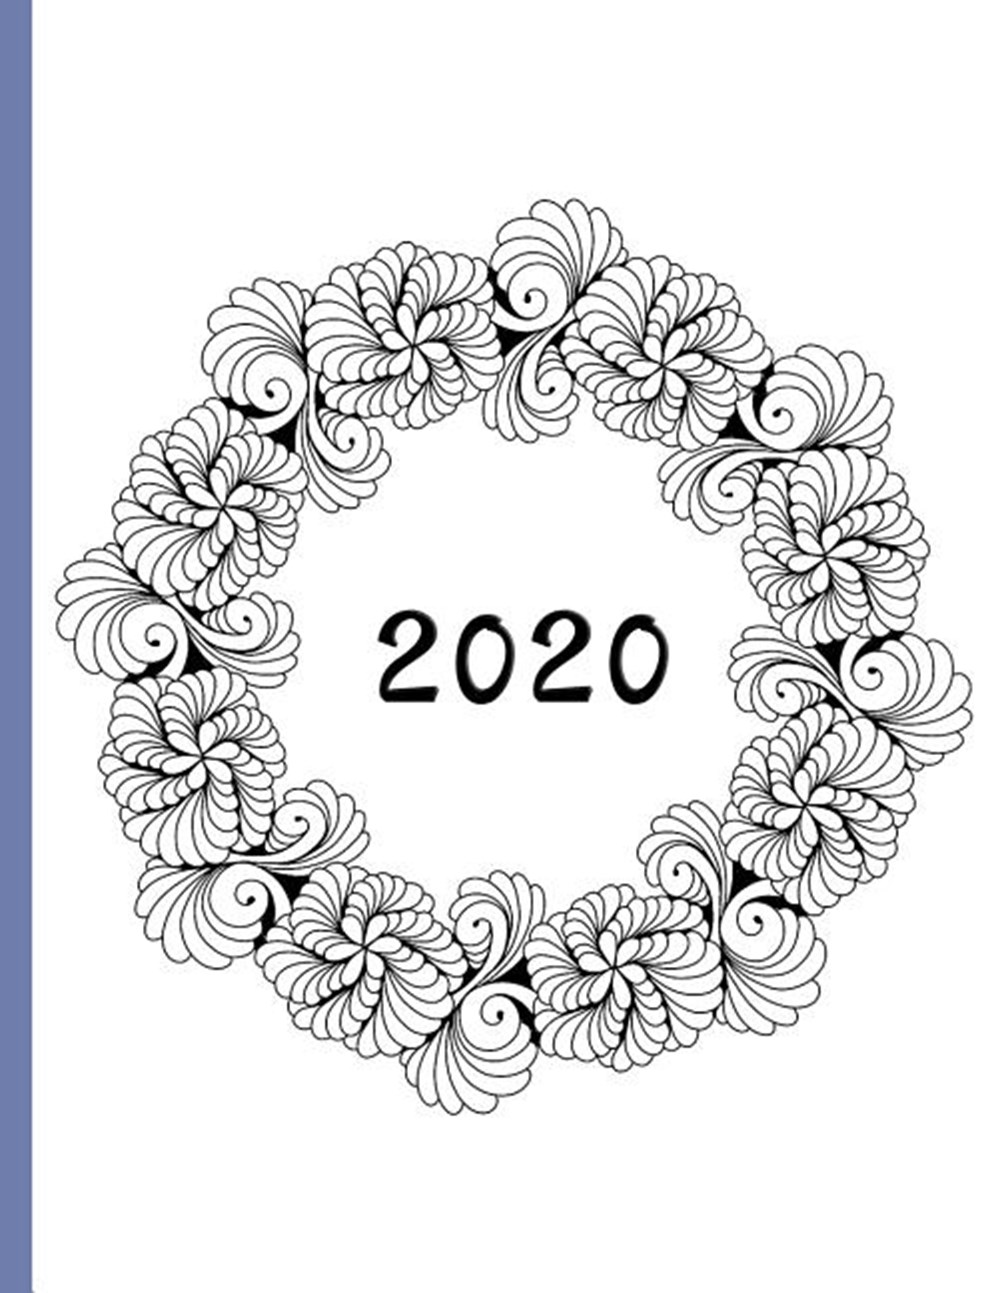 Spiral Wreath Black and White 2020 Schedule Planner and Organizer / Weekly Calendar